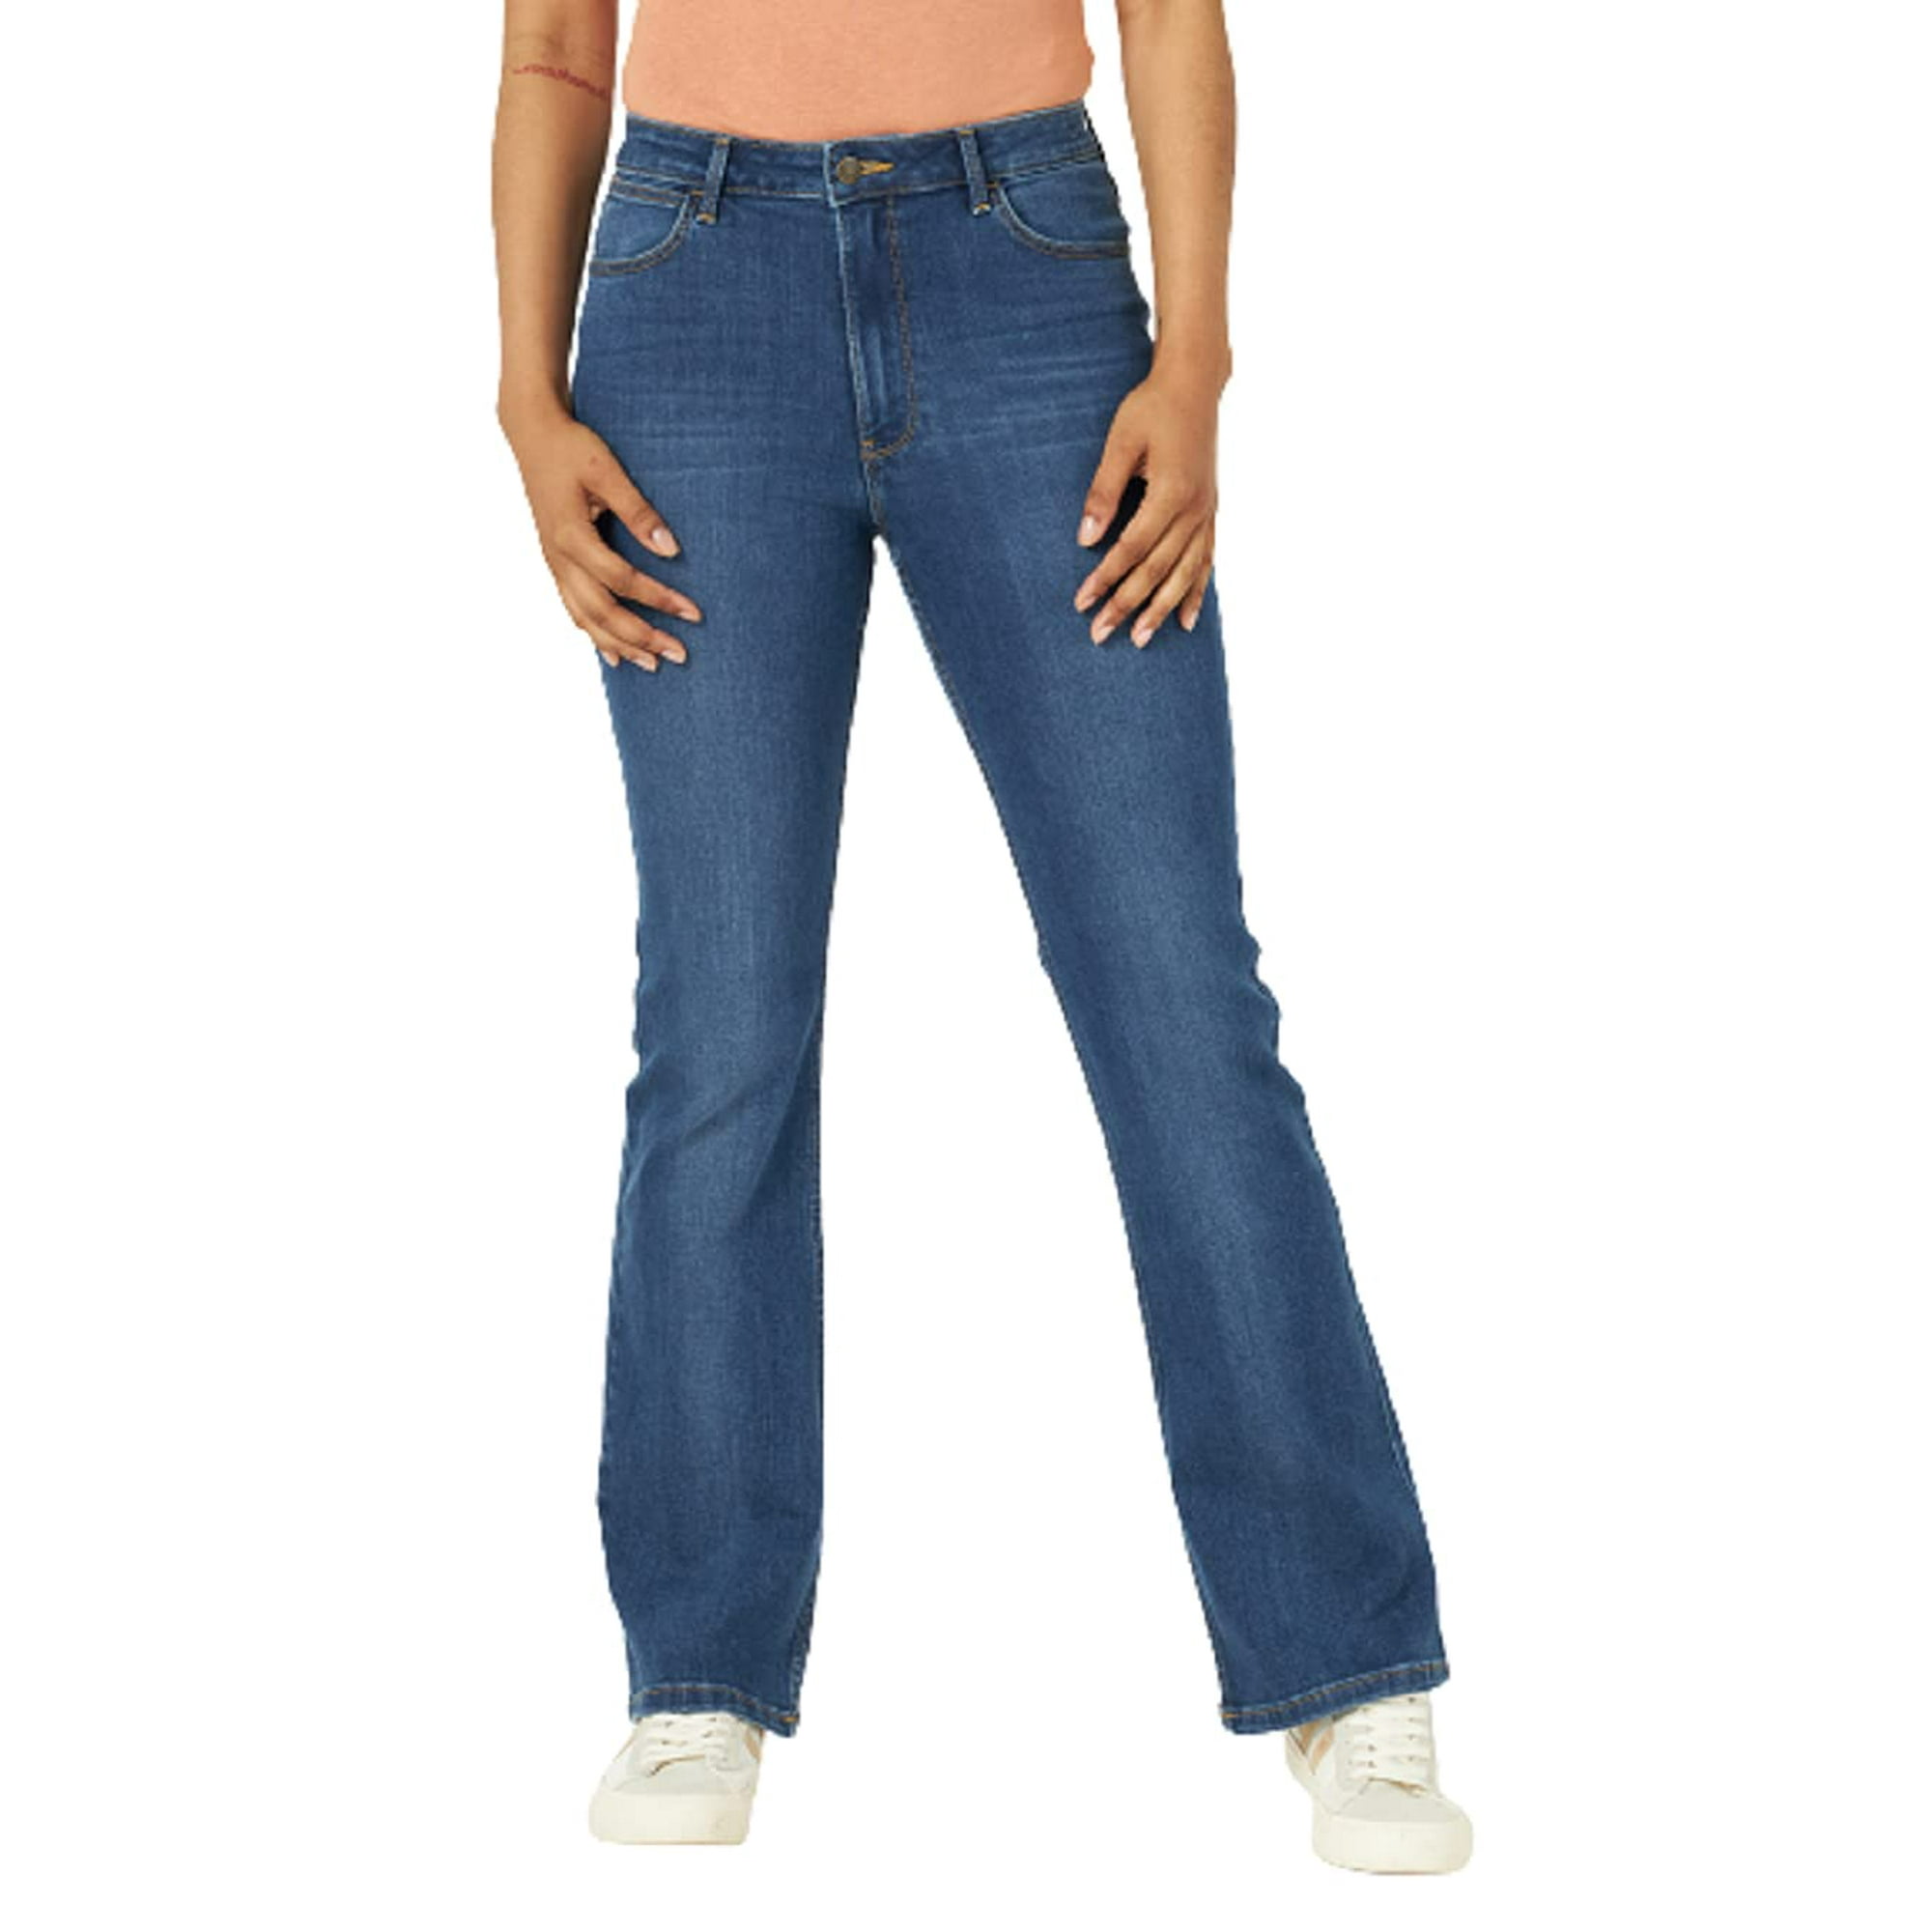 Wrangler Women's High Rise Bold Boot Jean, Hudson, 6W x 32L | Walmart Canada